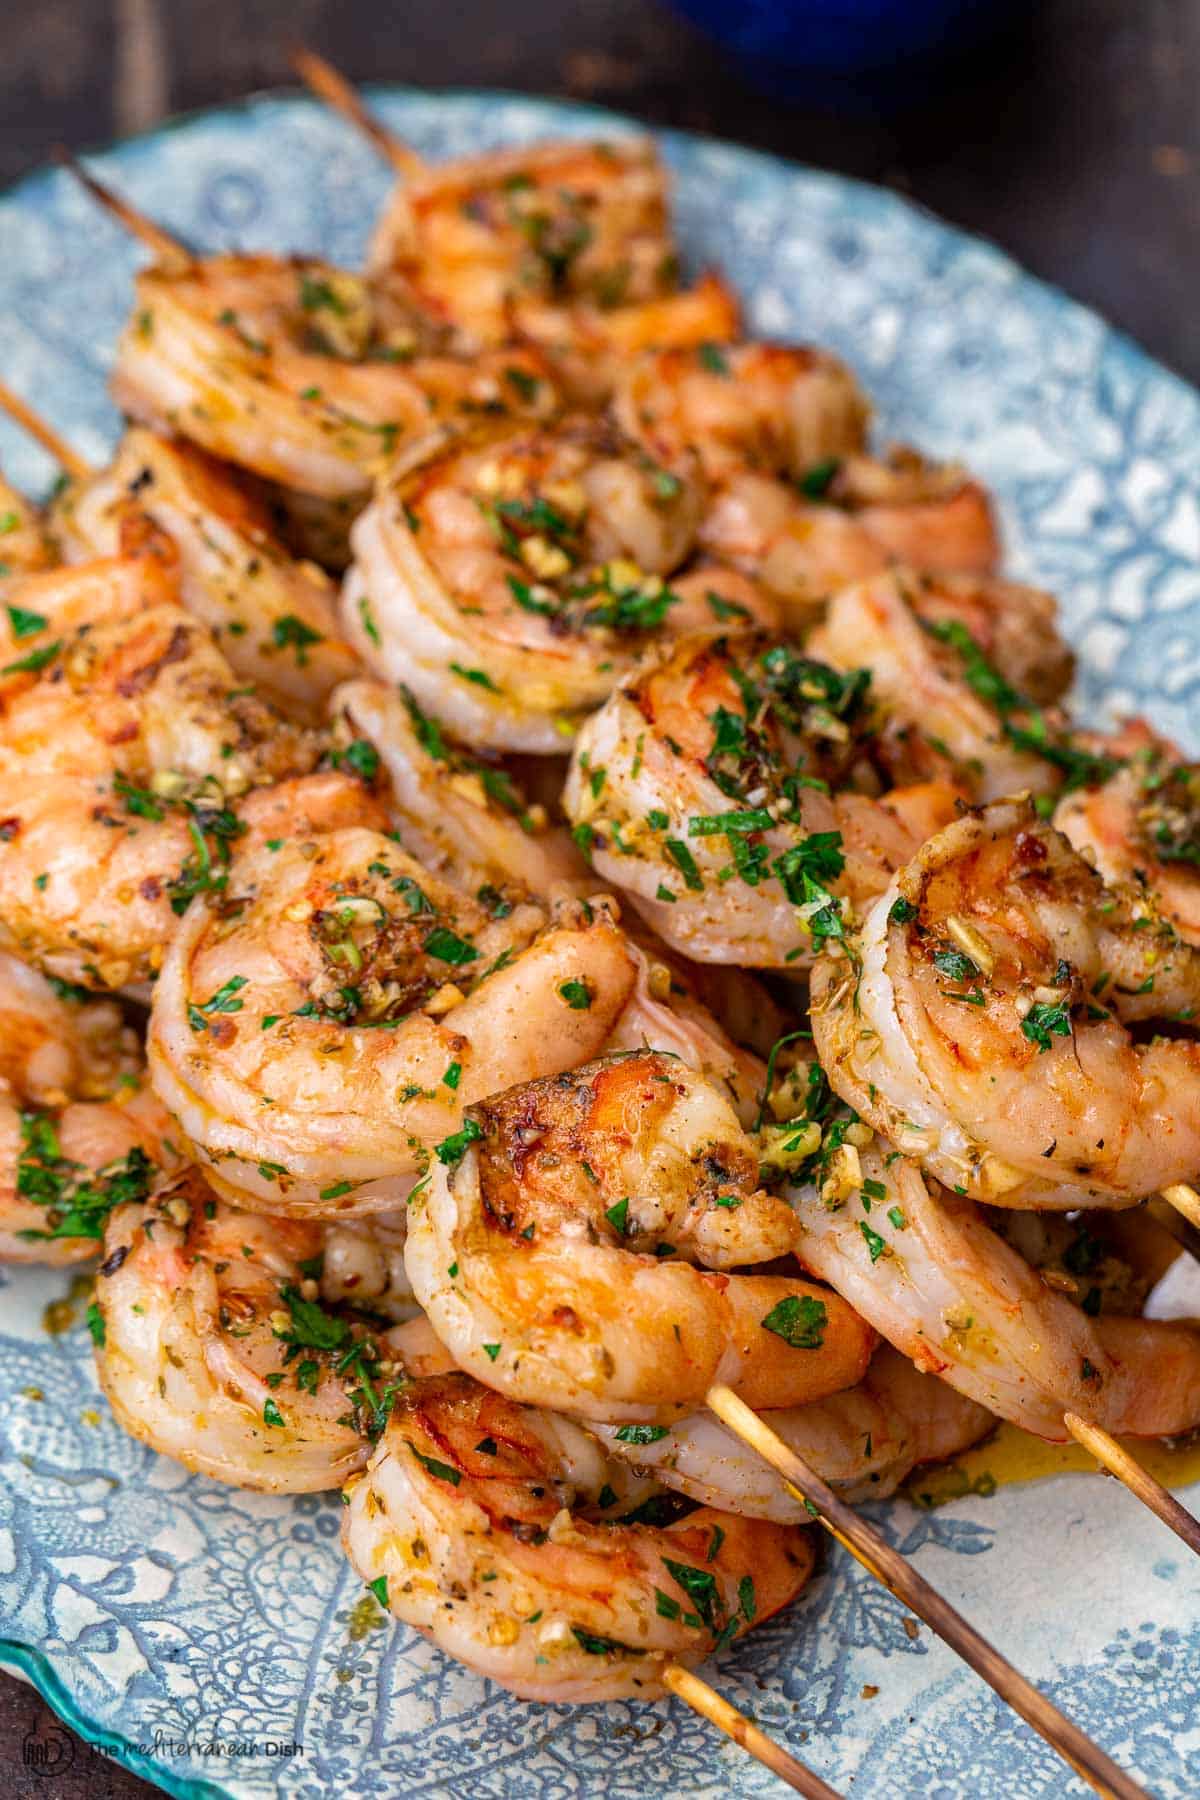 https://www.themediterraneandish.com/wp-content/uploads/2020/08/shrimp-kabobs-recipe-6.jpg